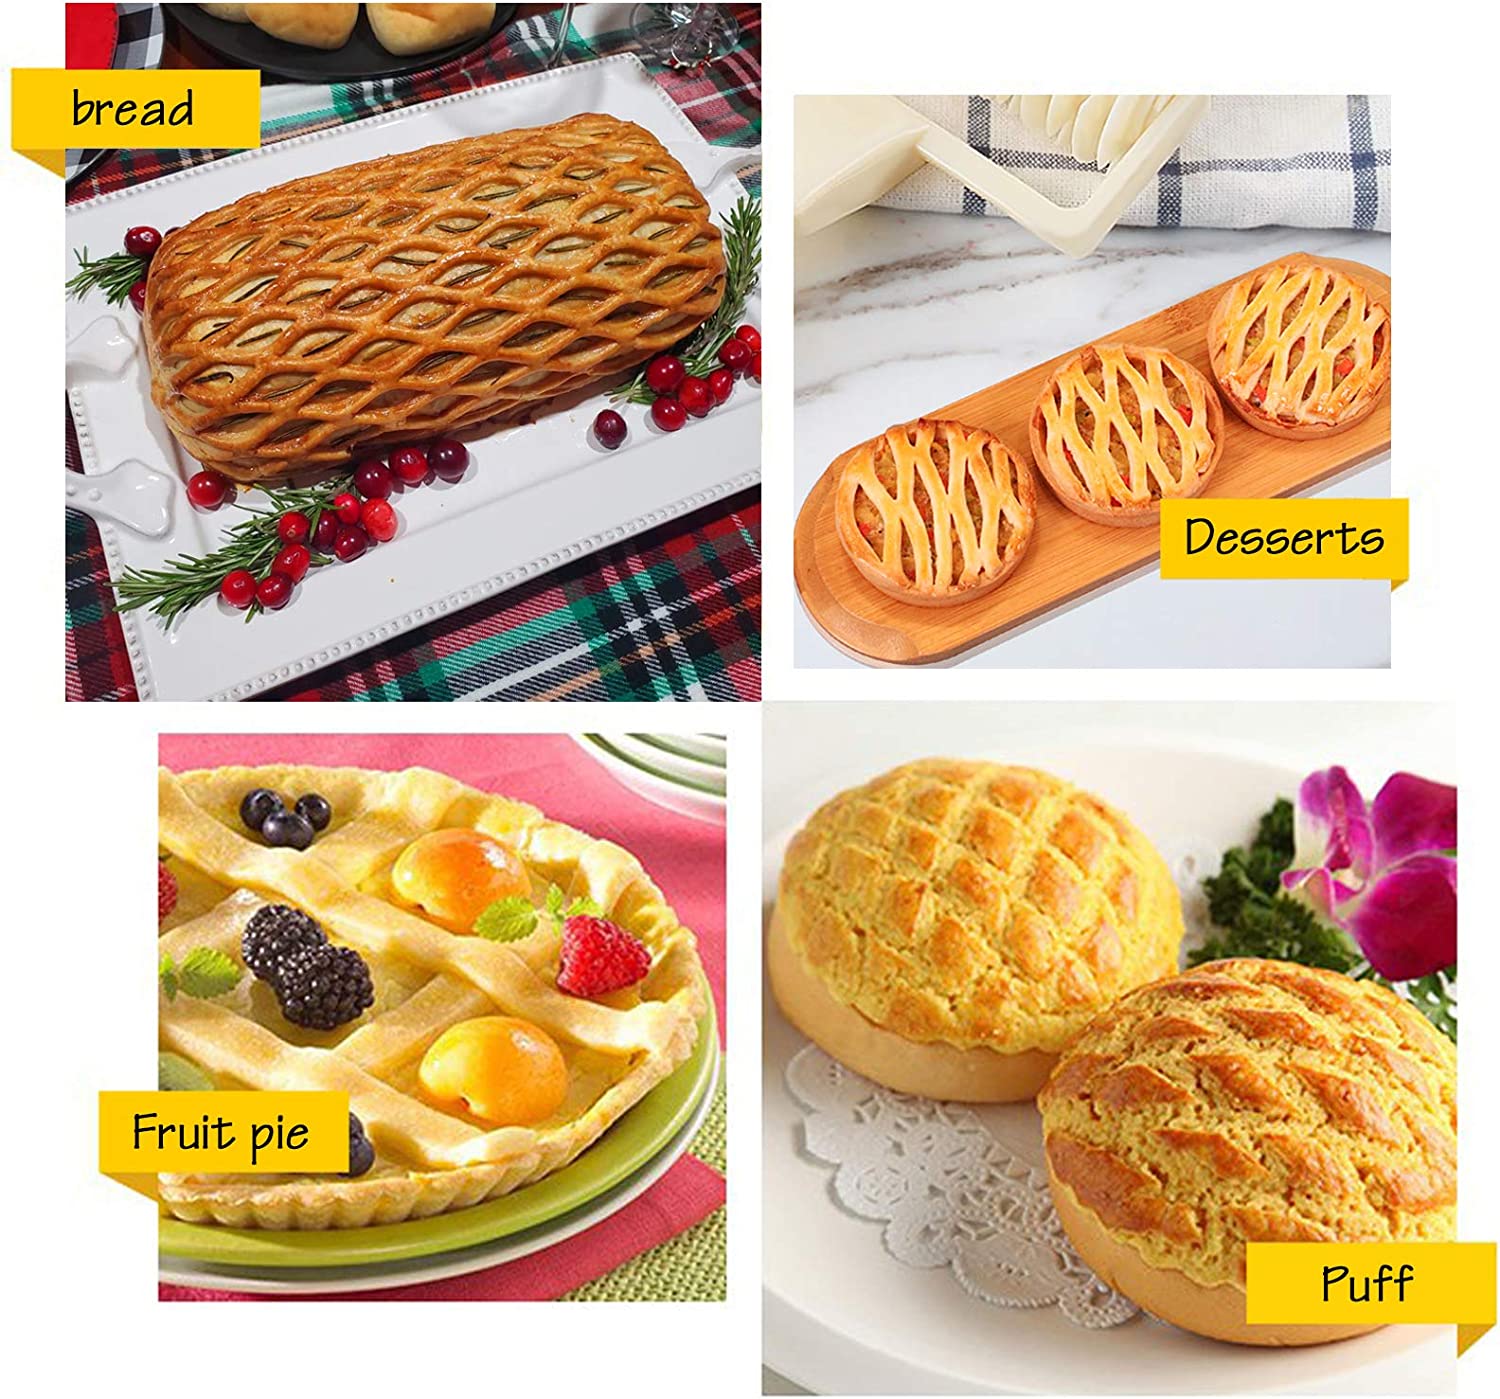 Lattice pastry roller cutter